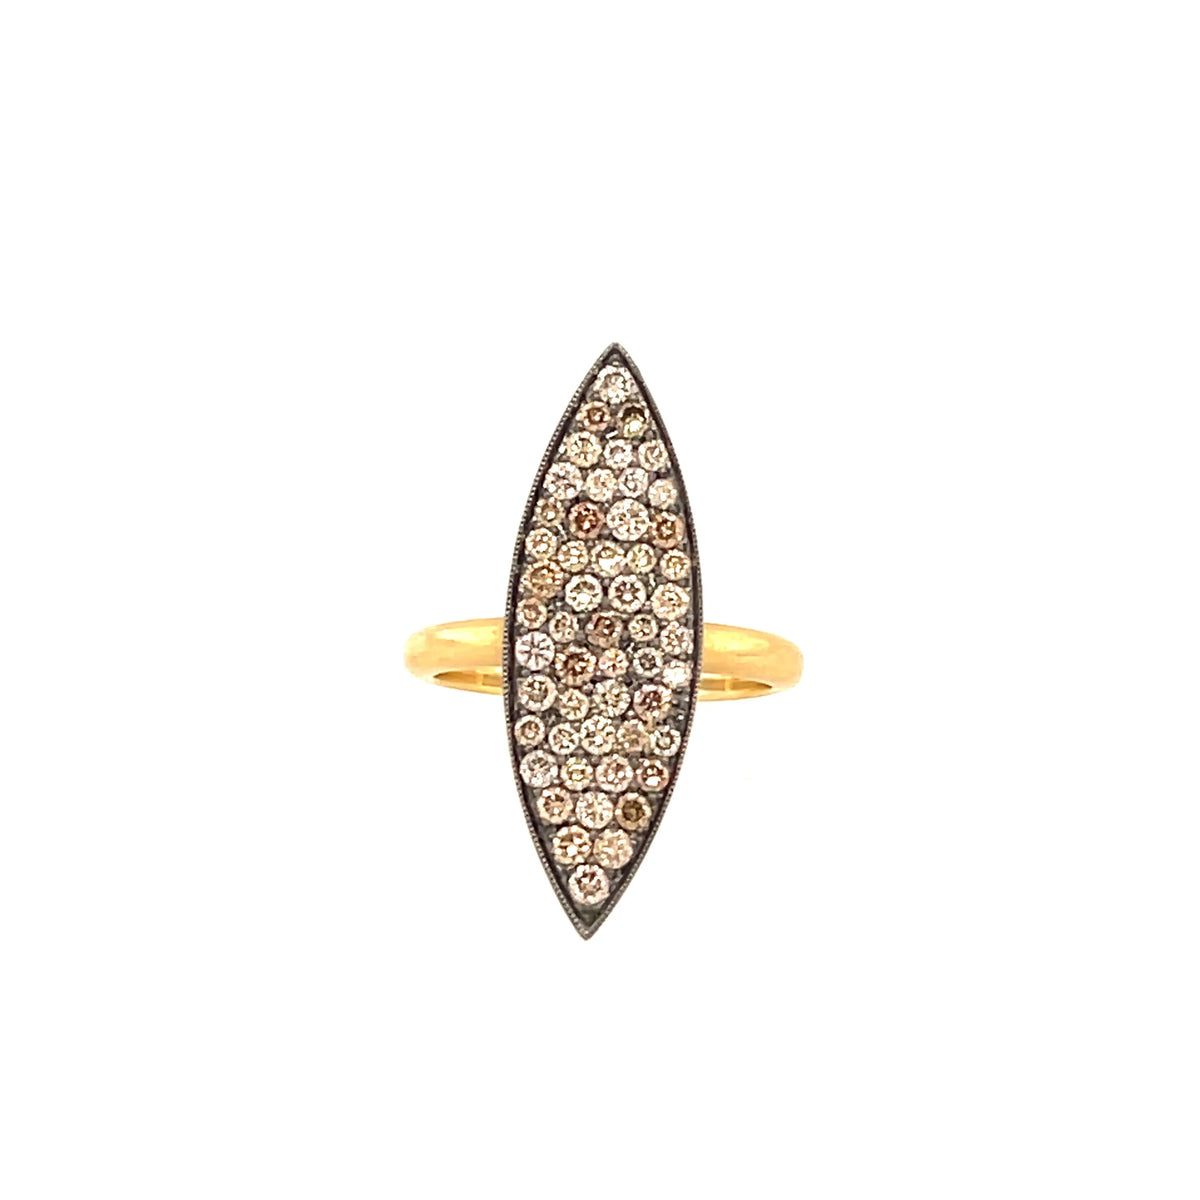 Marquise Champagne Diamond Pave Ring - Squash Blossom Vail